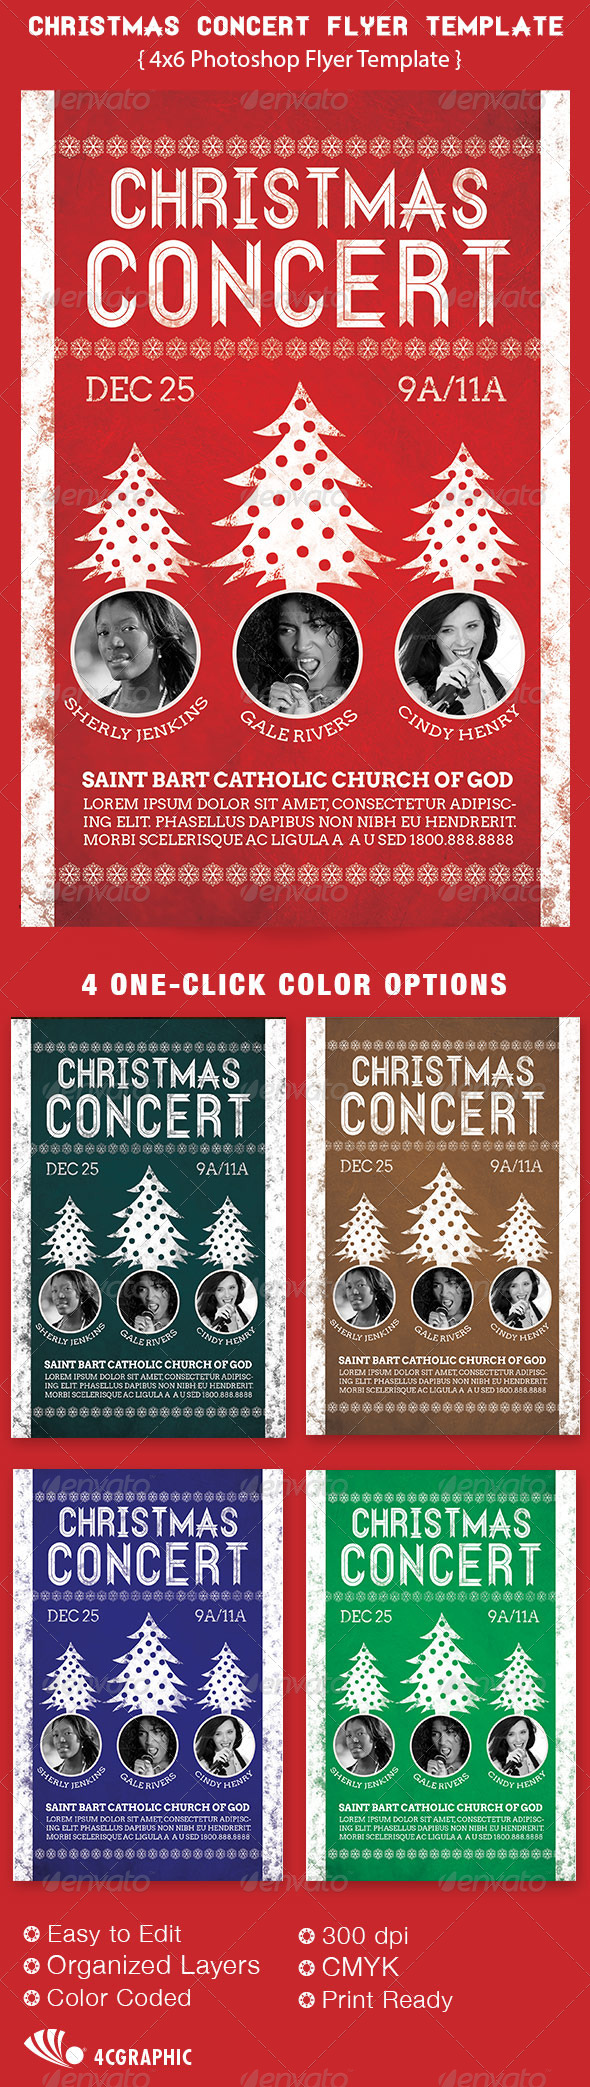 Christmas Concert Flyer Template